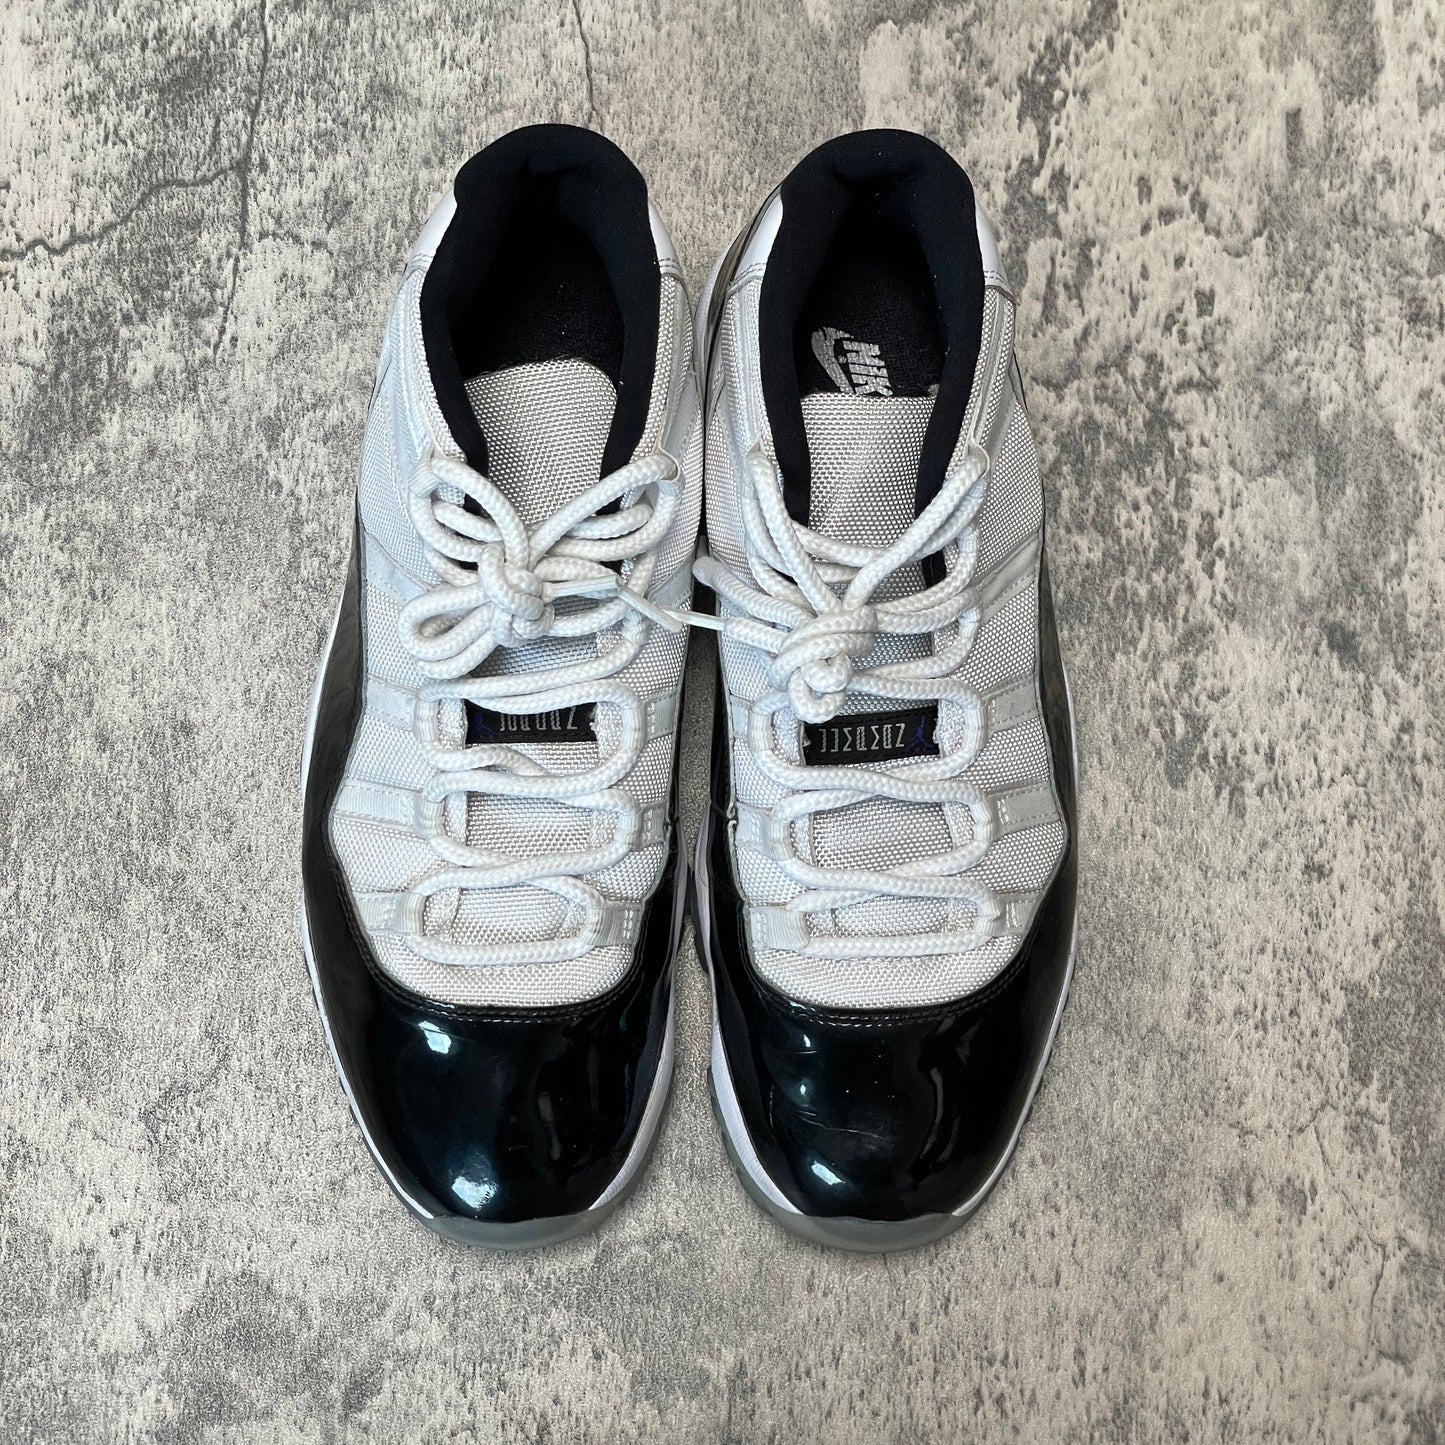 Jordan 11 Retro Concord (2018) Size 11